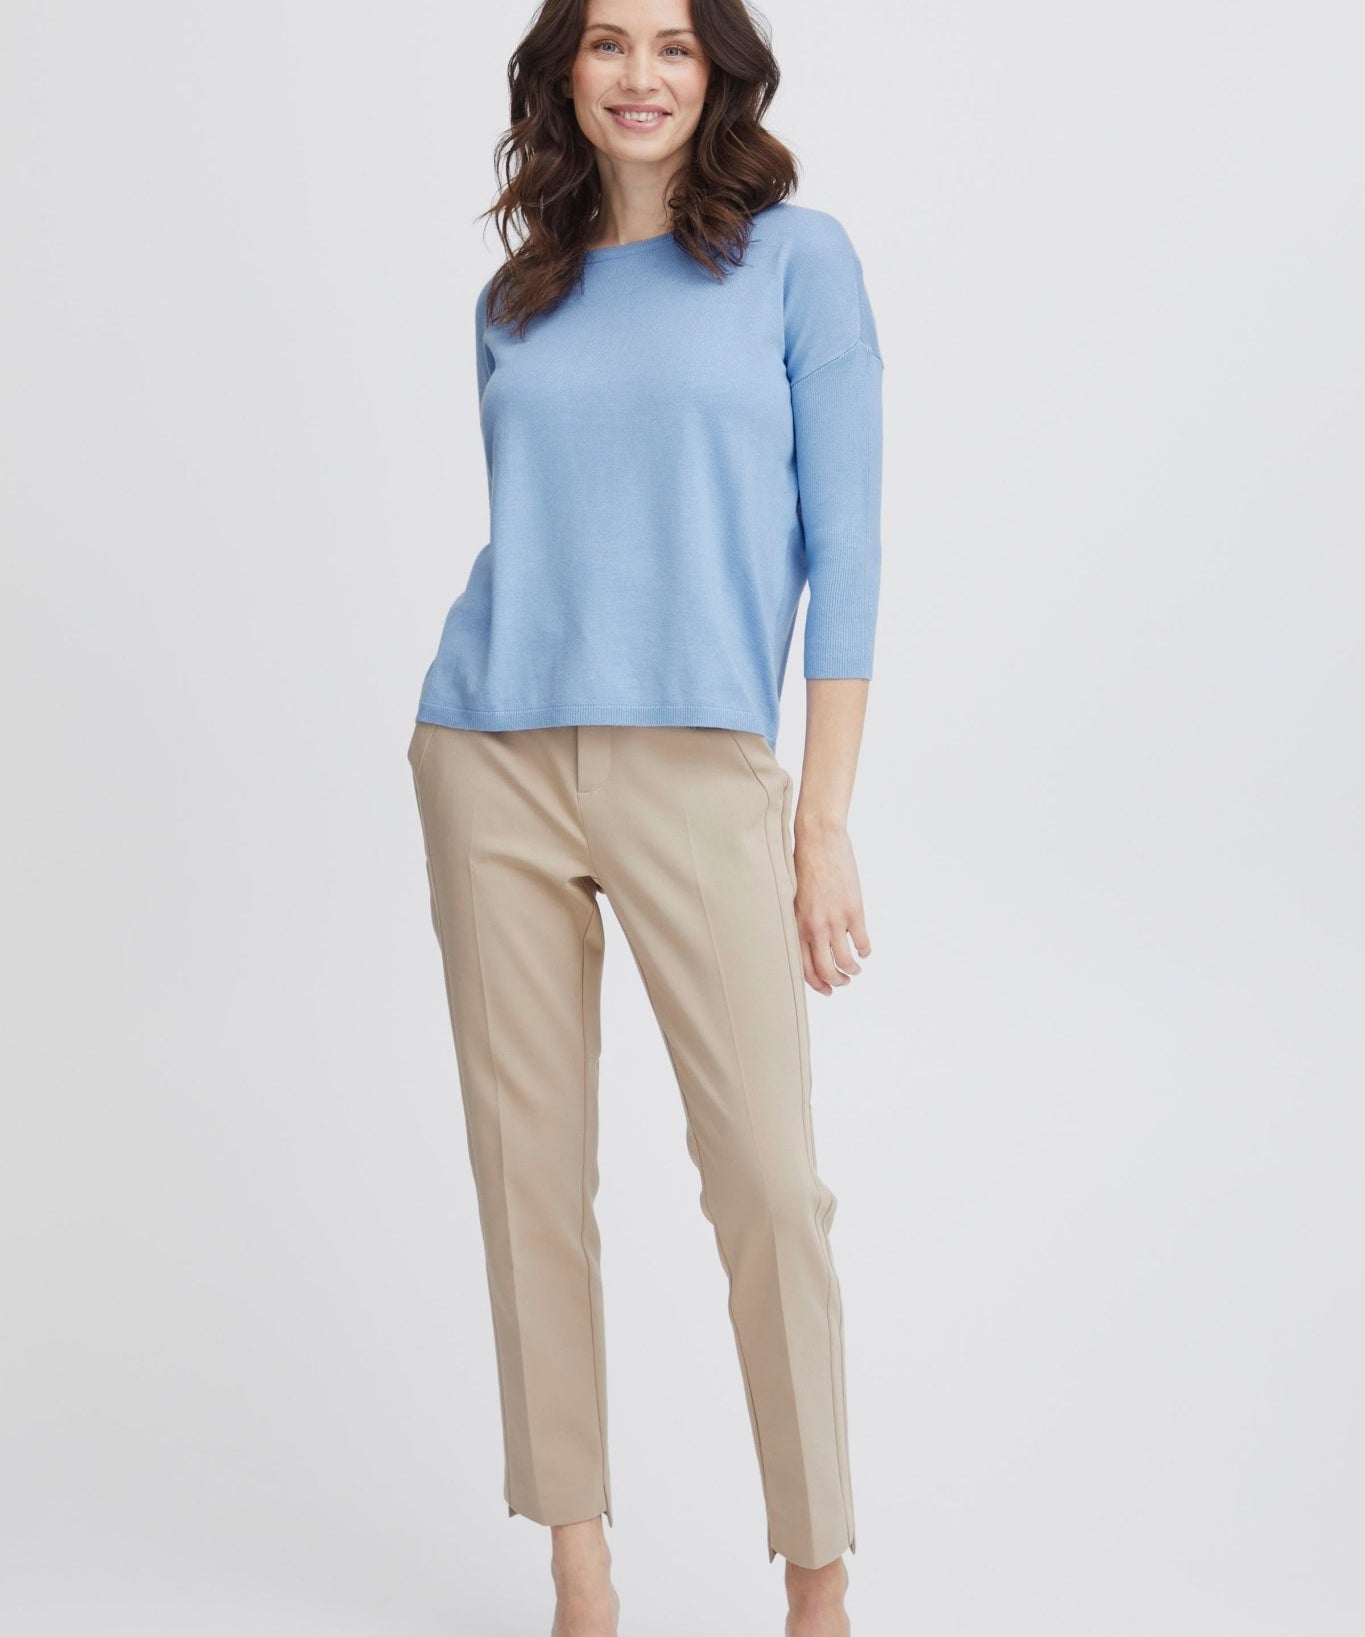 Clia sweater by Fransa - hydrangea - Blue Sky Fashions & Lingerie